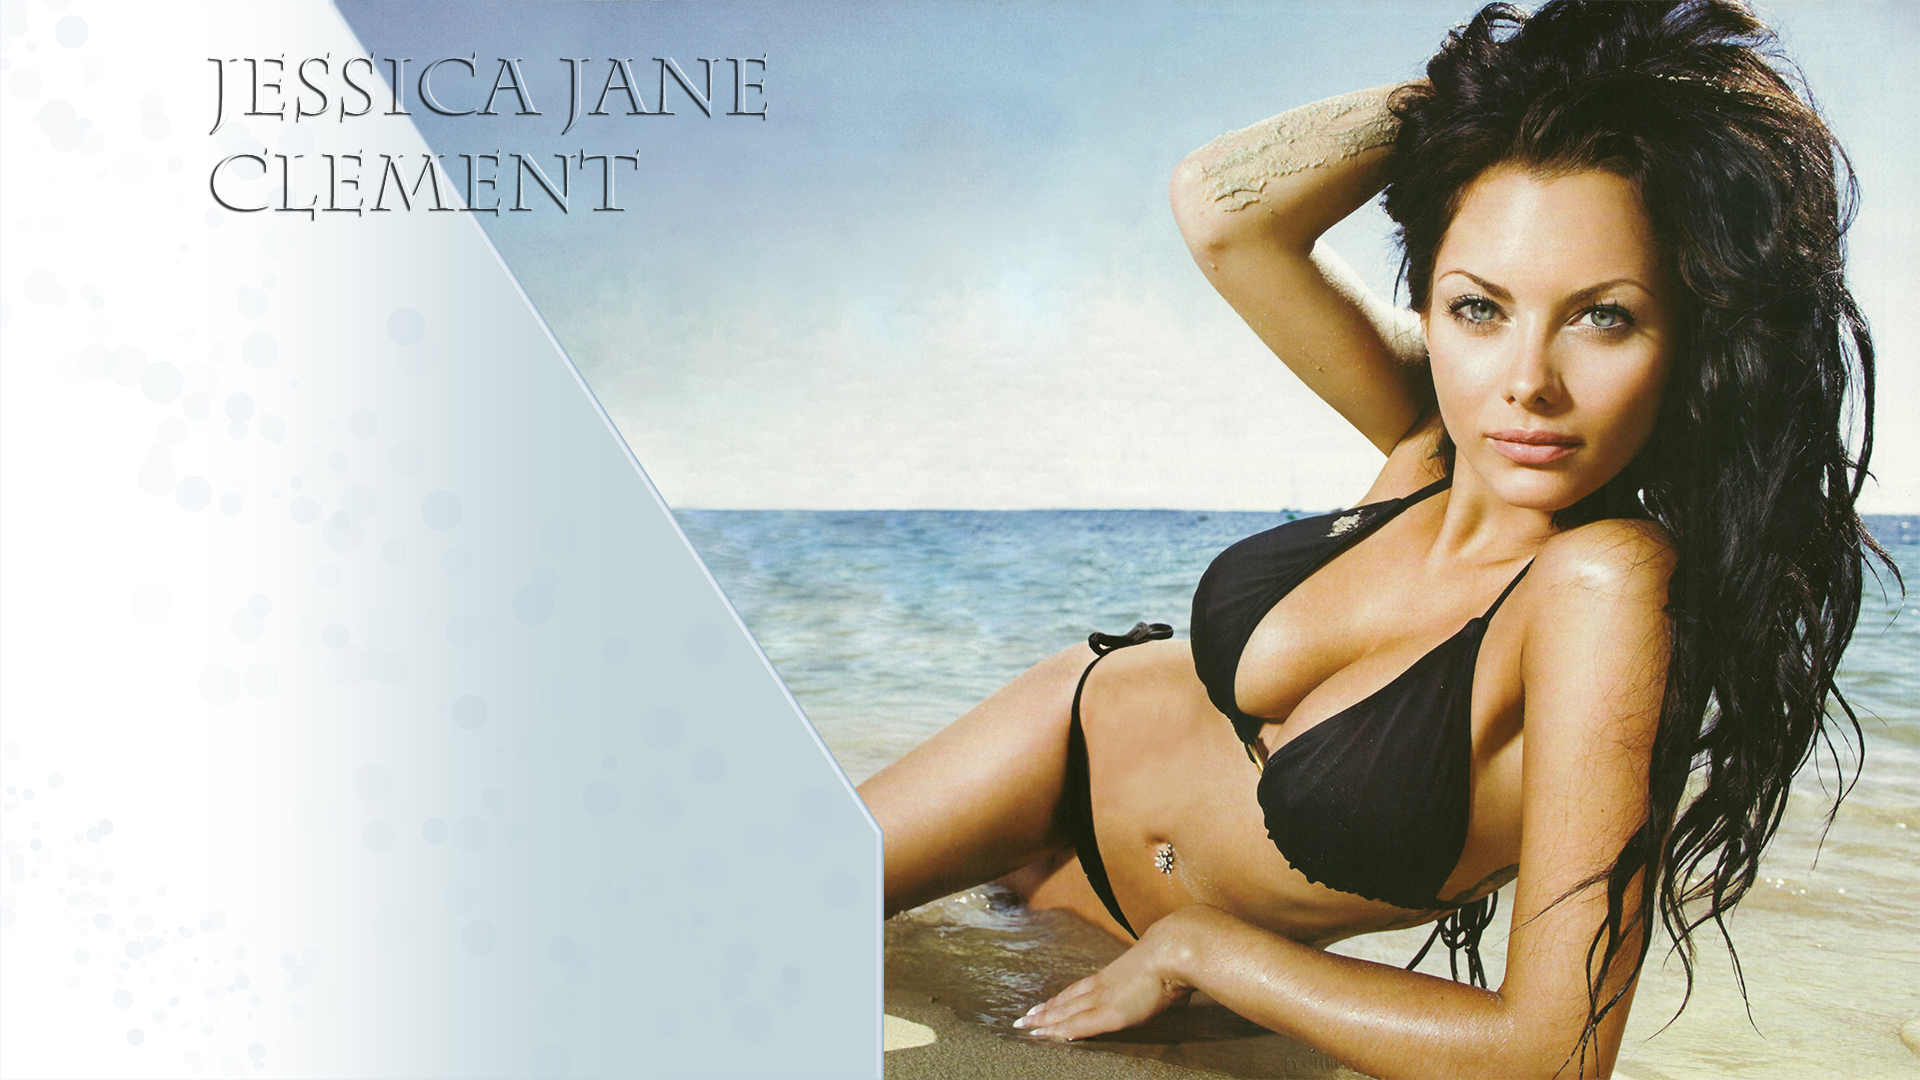 Jessica-Jane Clement Bikini Pictures. 